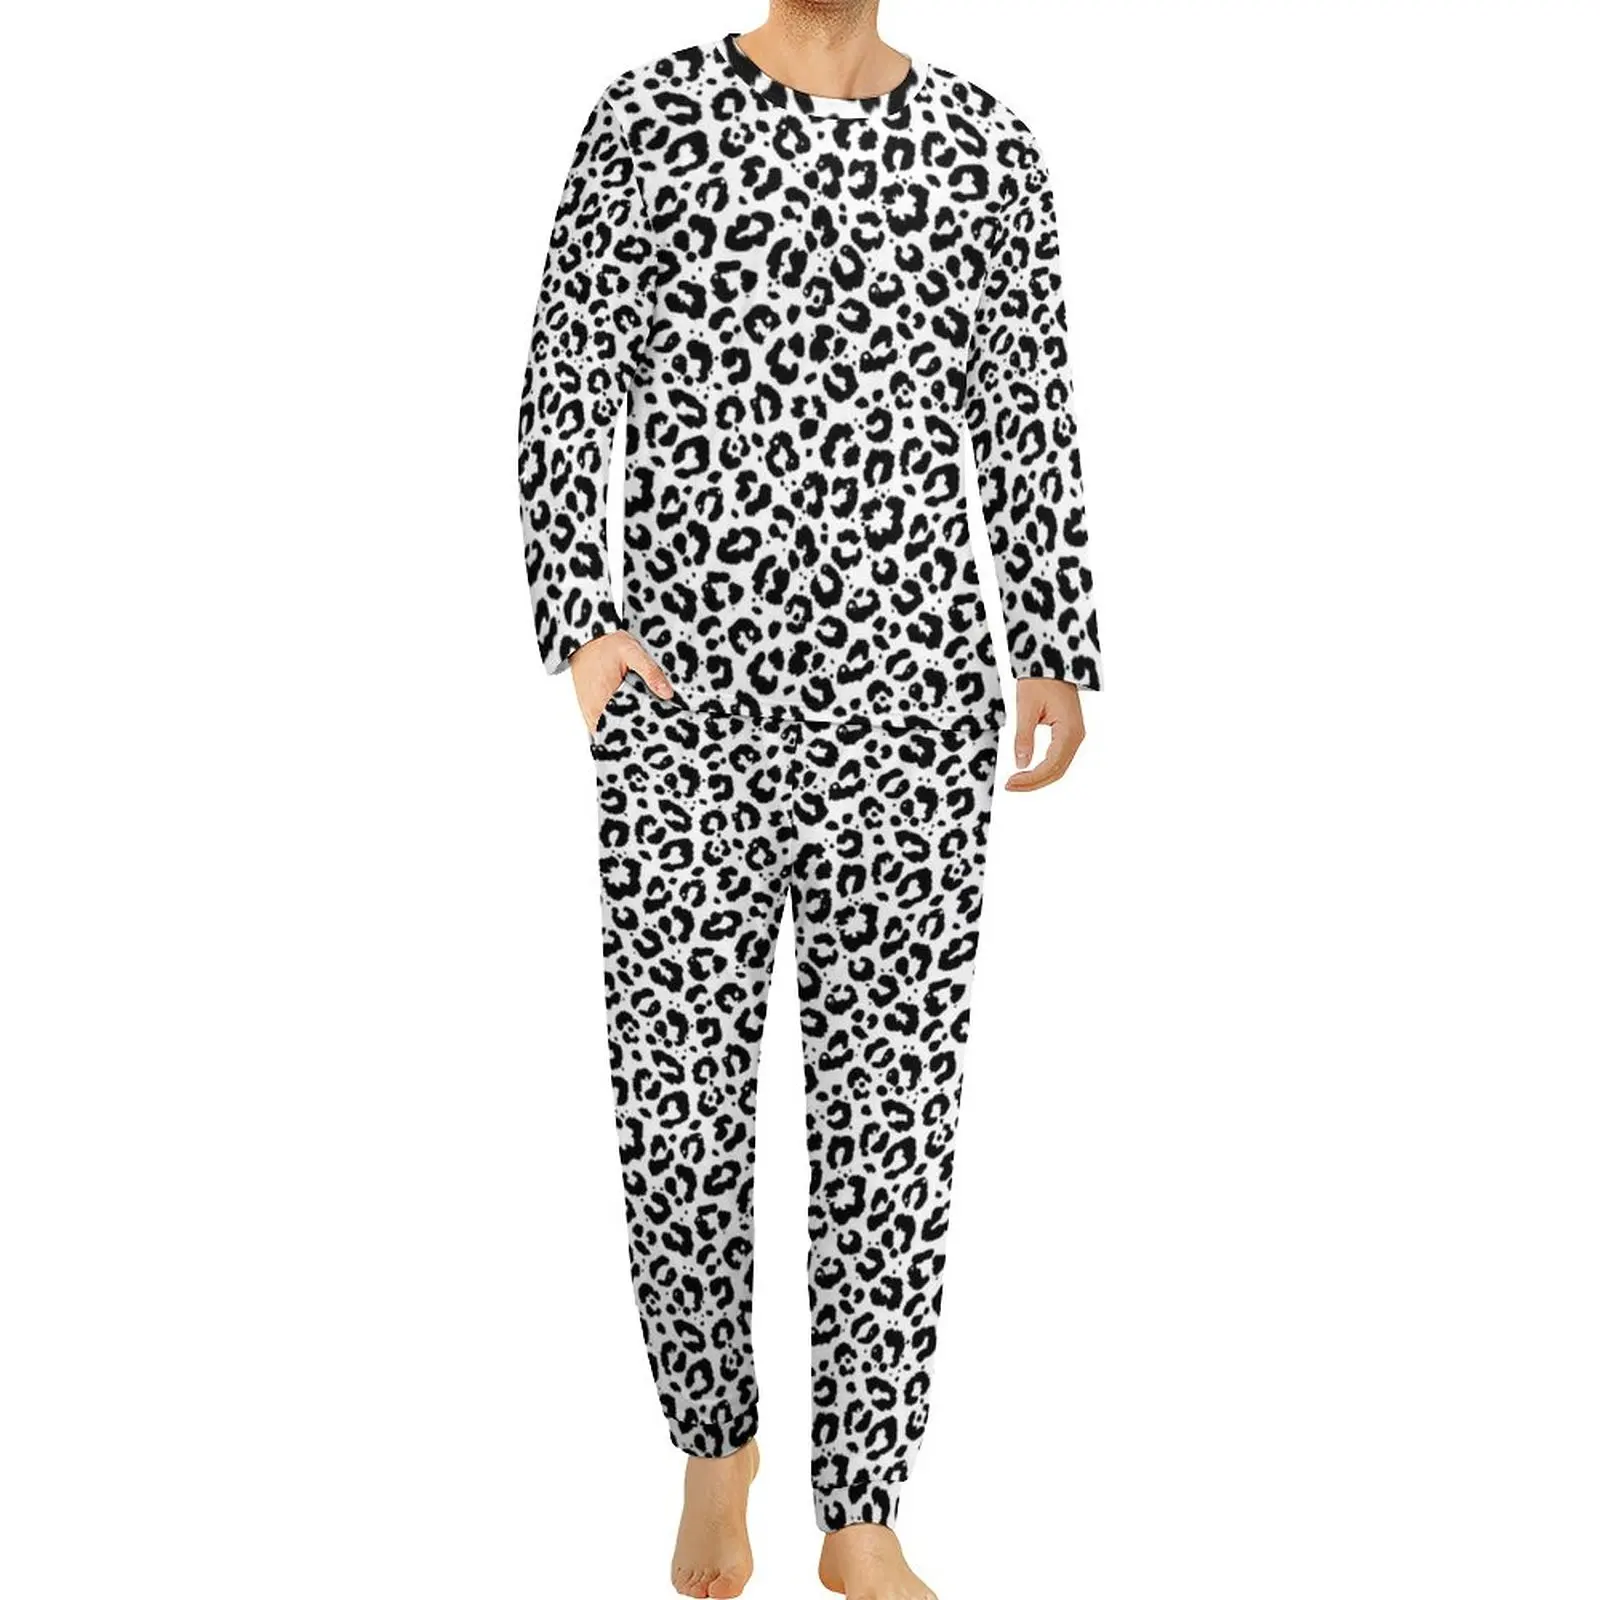 

Black White Leopard Print Pajamas Daily 2 Pieces Animale Snow Cheetah Cute Pajama Sets Long-Sleeve Bedroom Nightwear Large Size